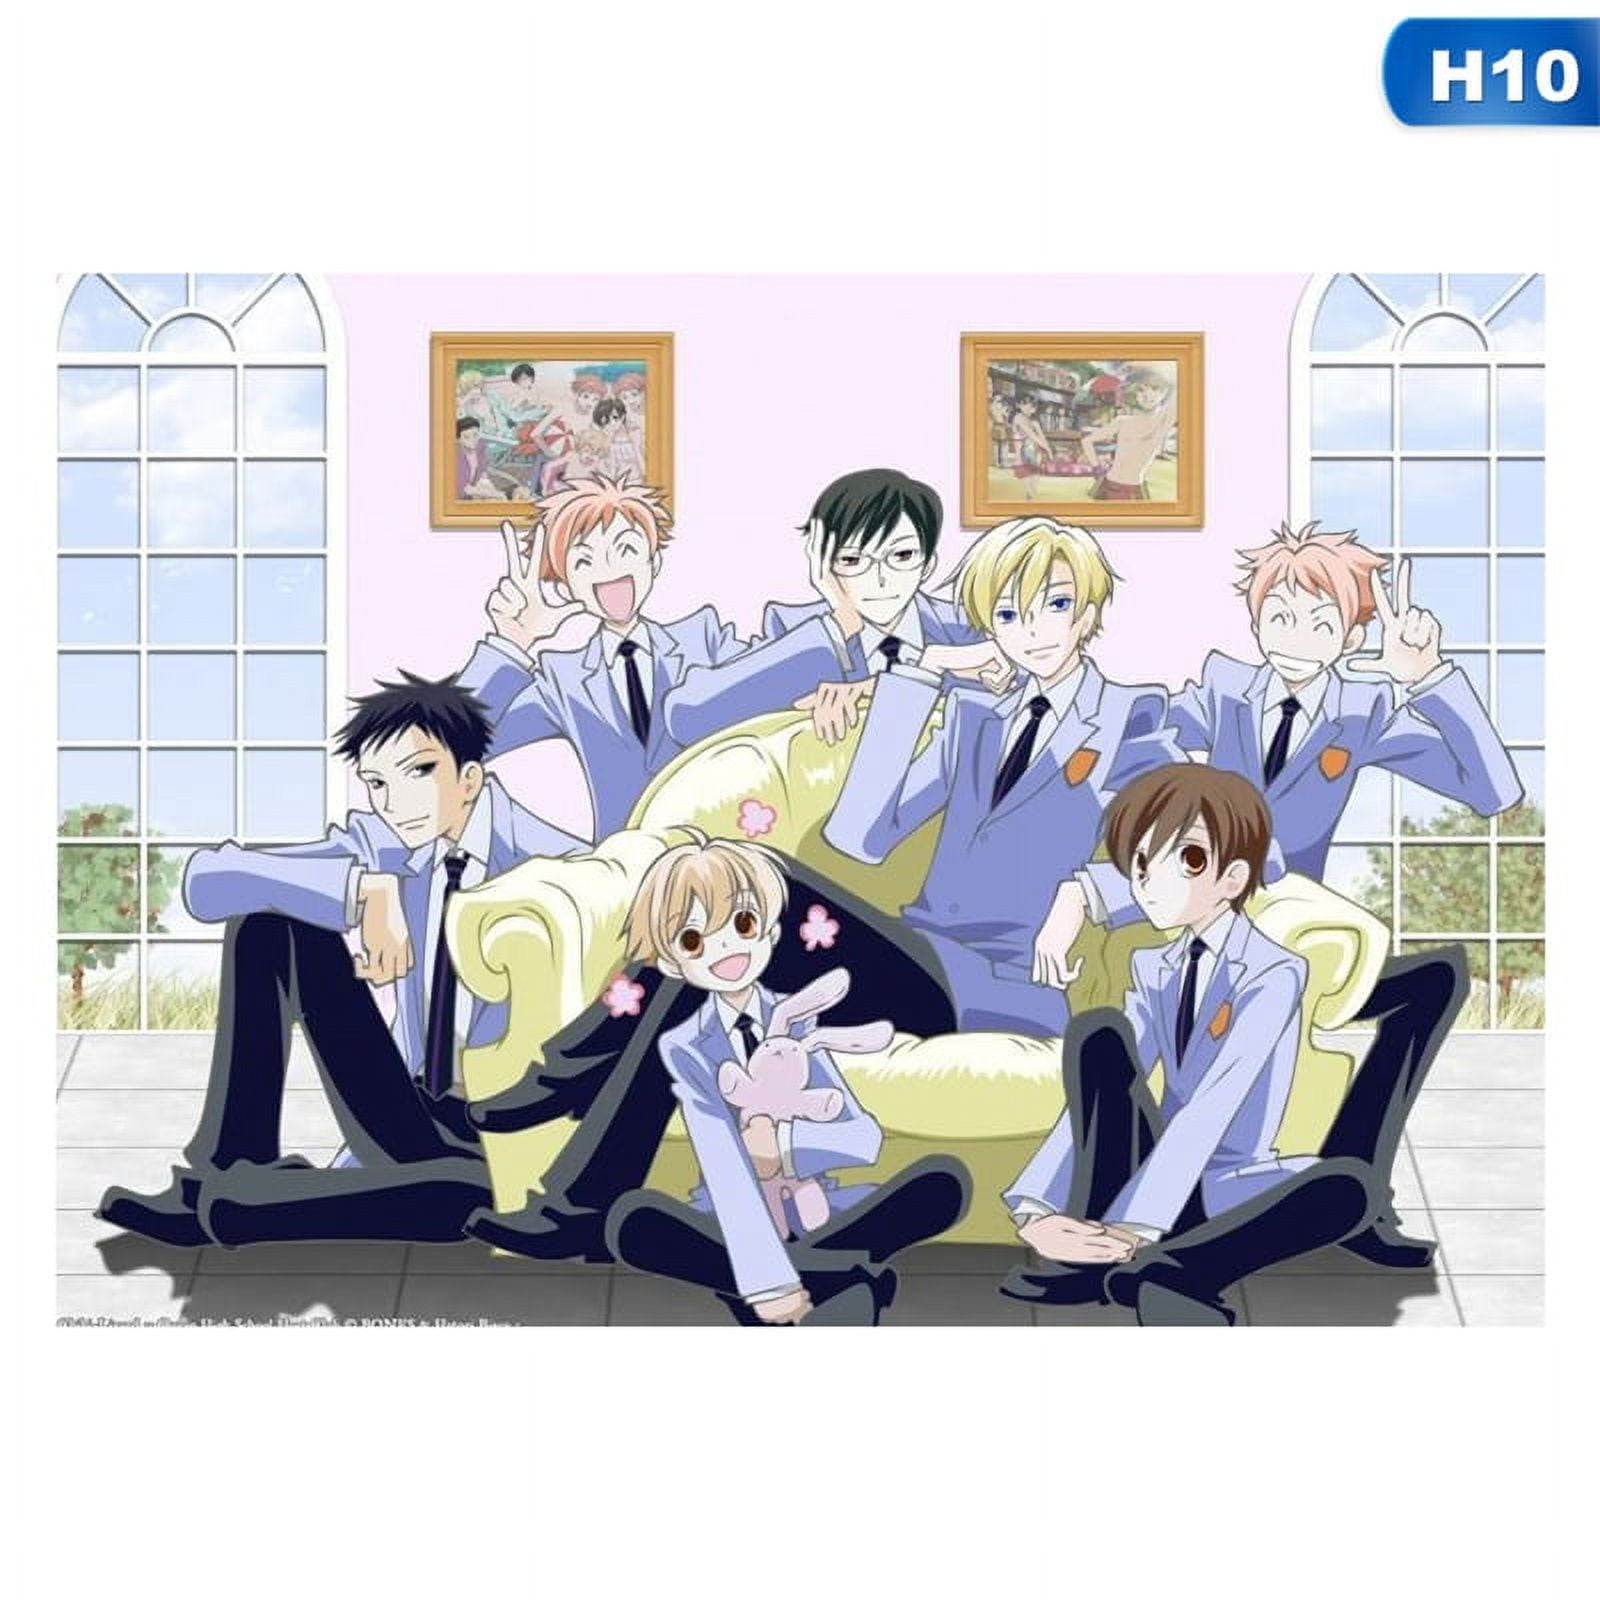 Anime: Ouran High School Host Club